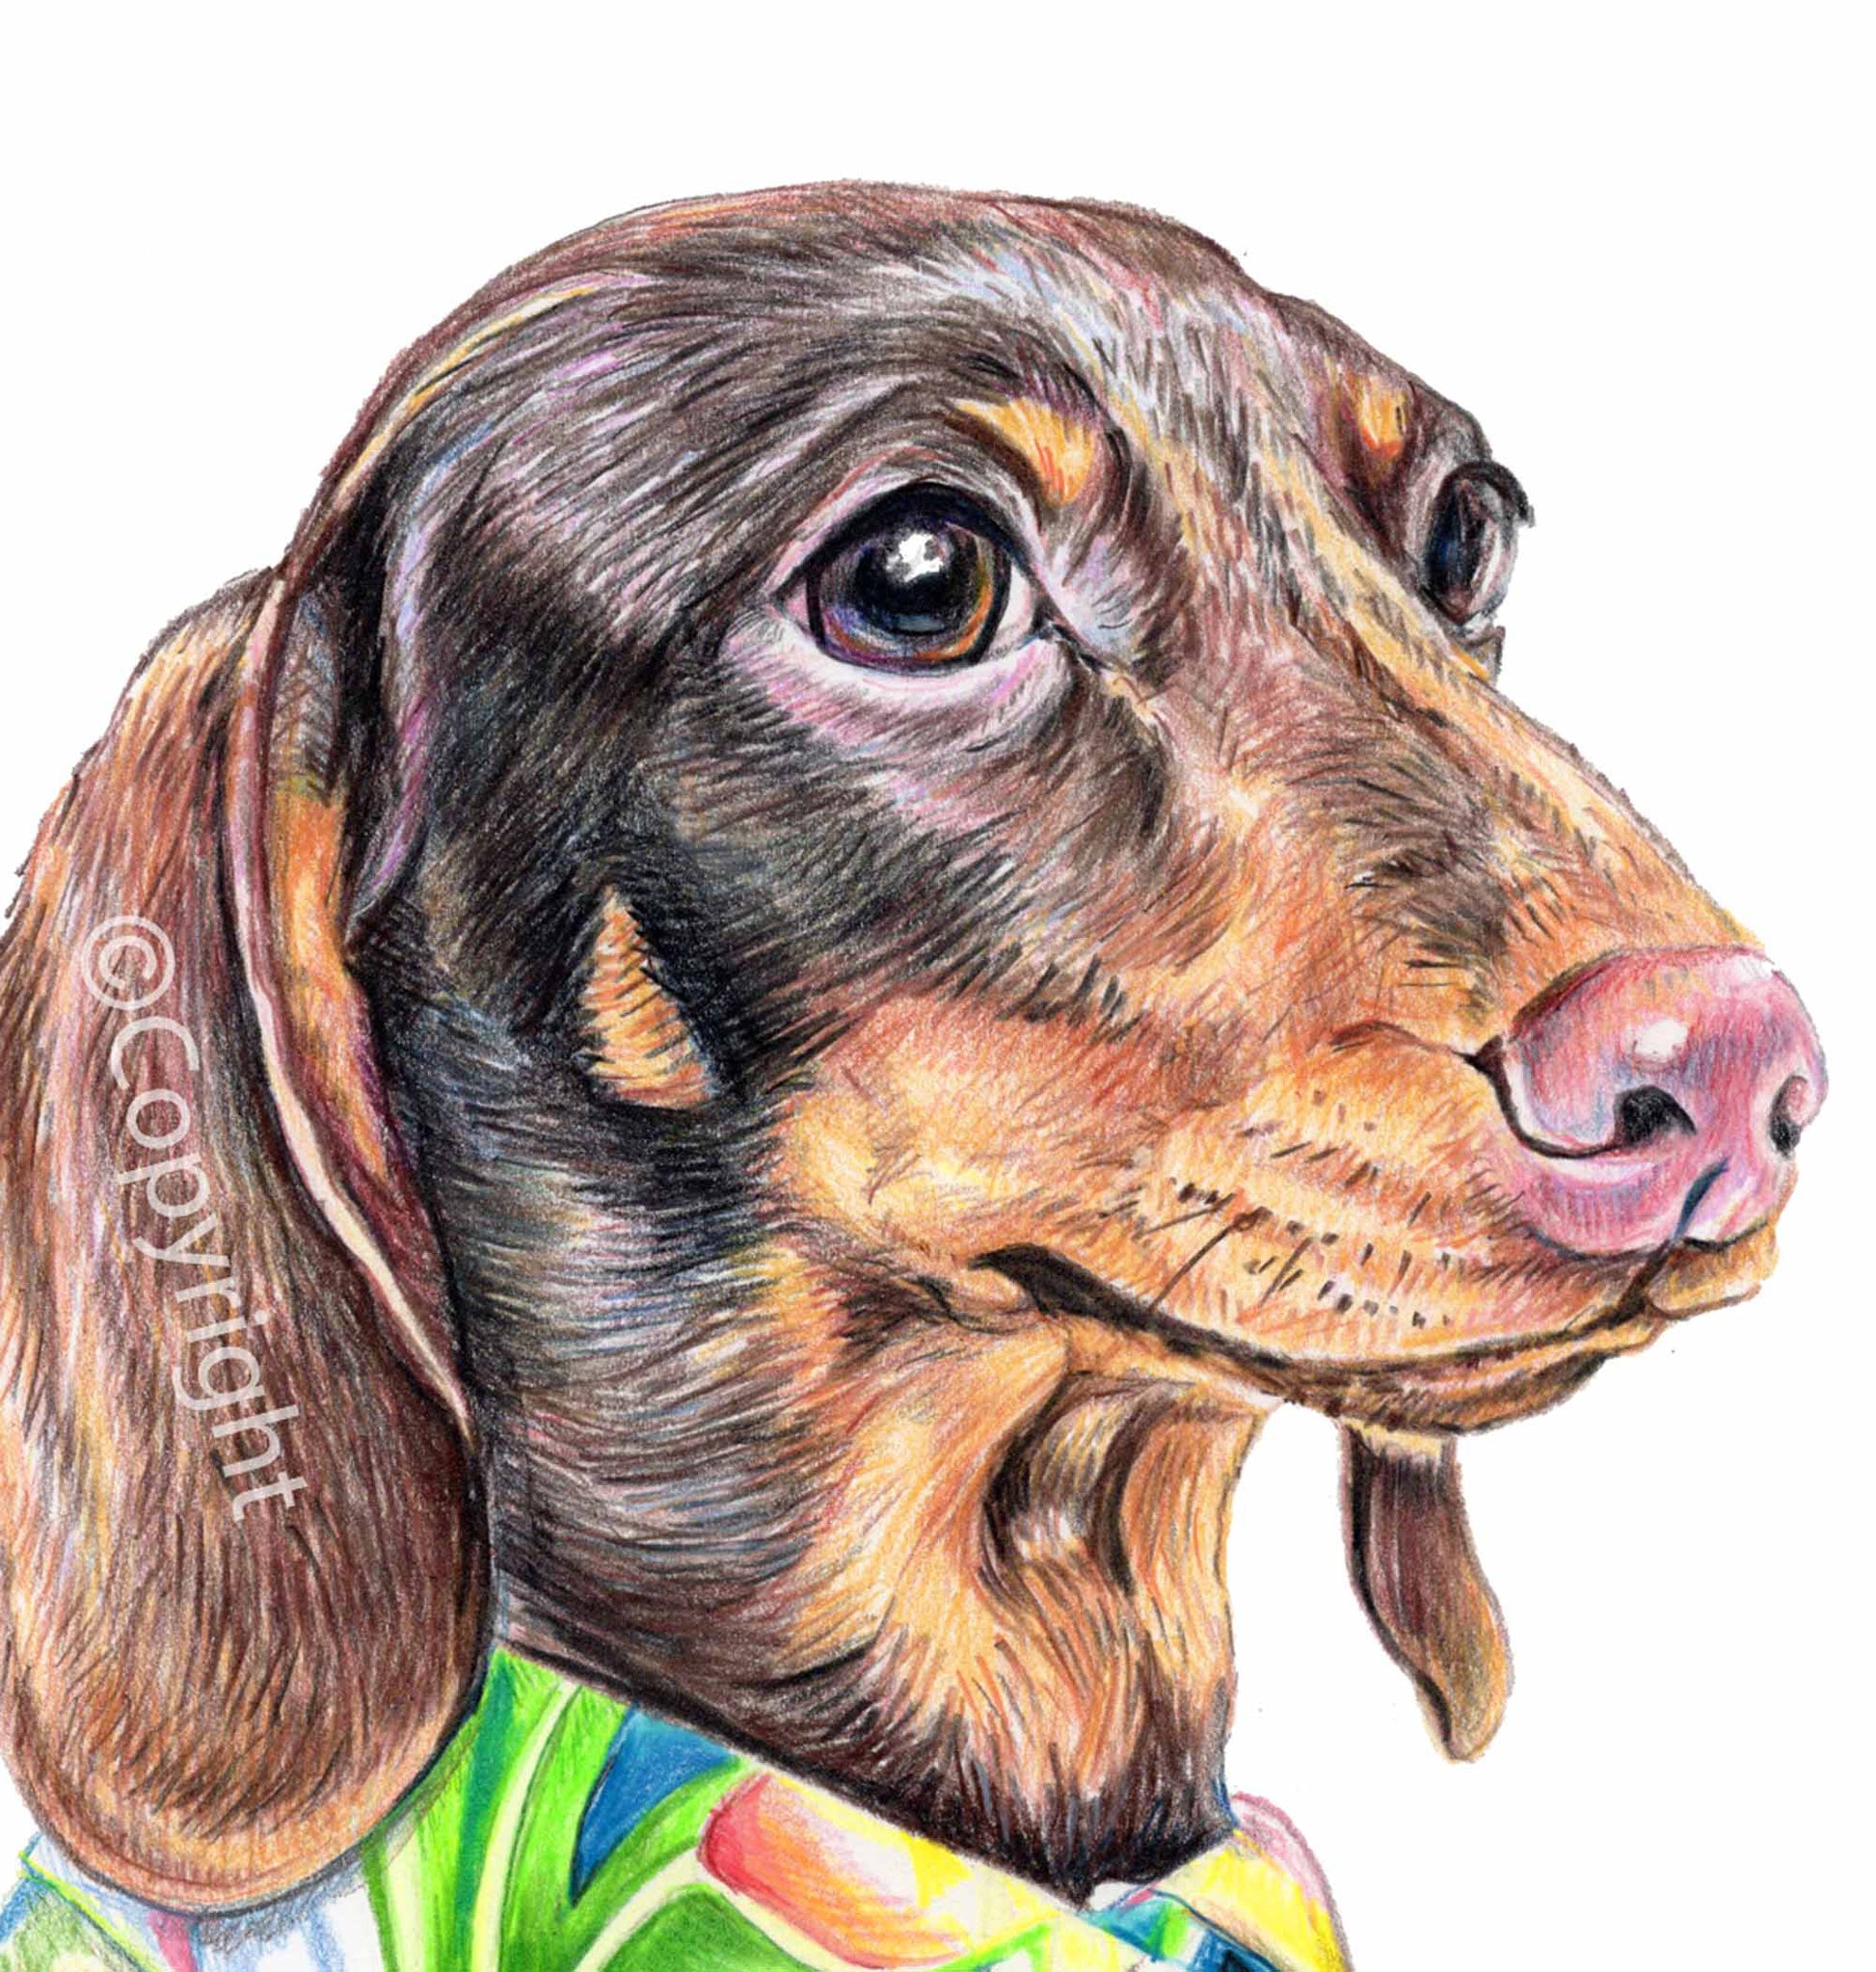 Coloured pencil drawing of a dachshund dog wearing a bright green and blue Hawaiian shirt. Art by Deidre Wicks